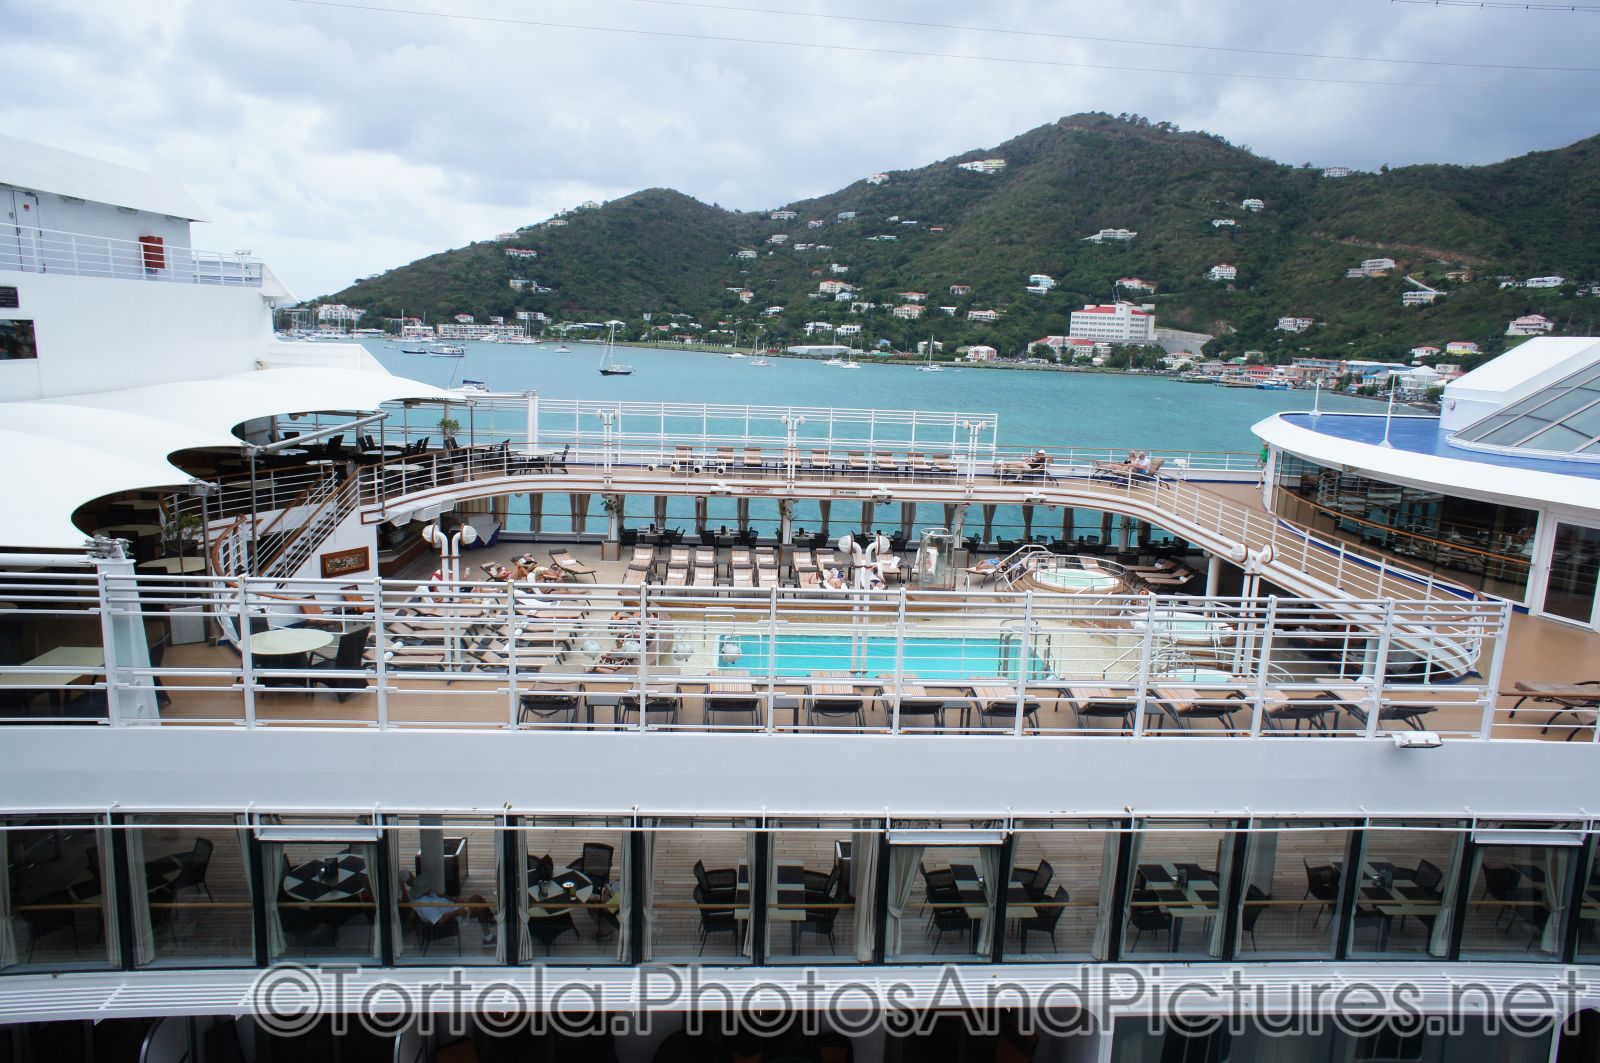 Pool deck of Silversea Silver Spirit docked at Tortola.jpg
